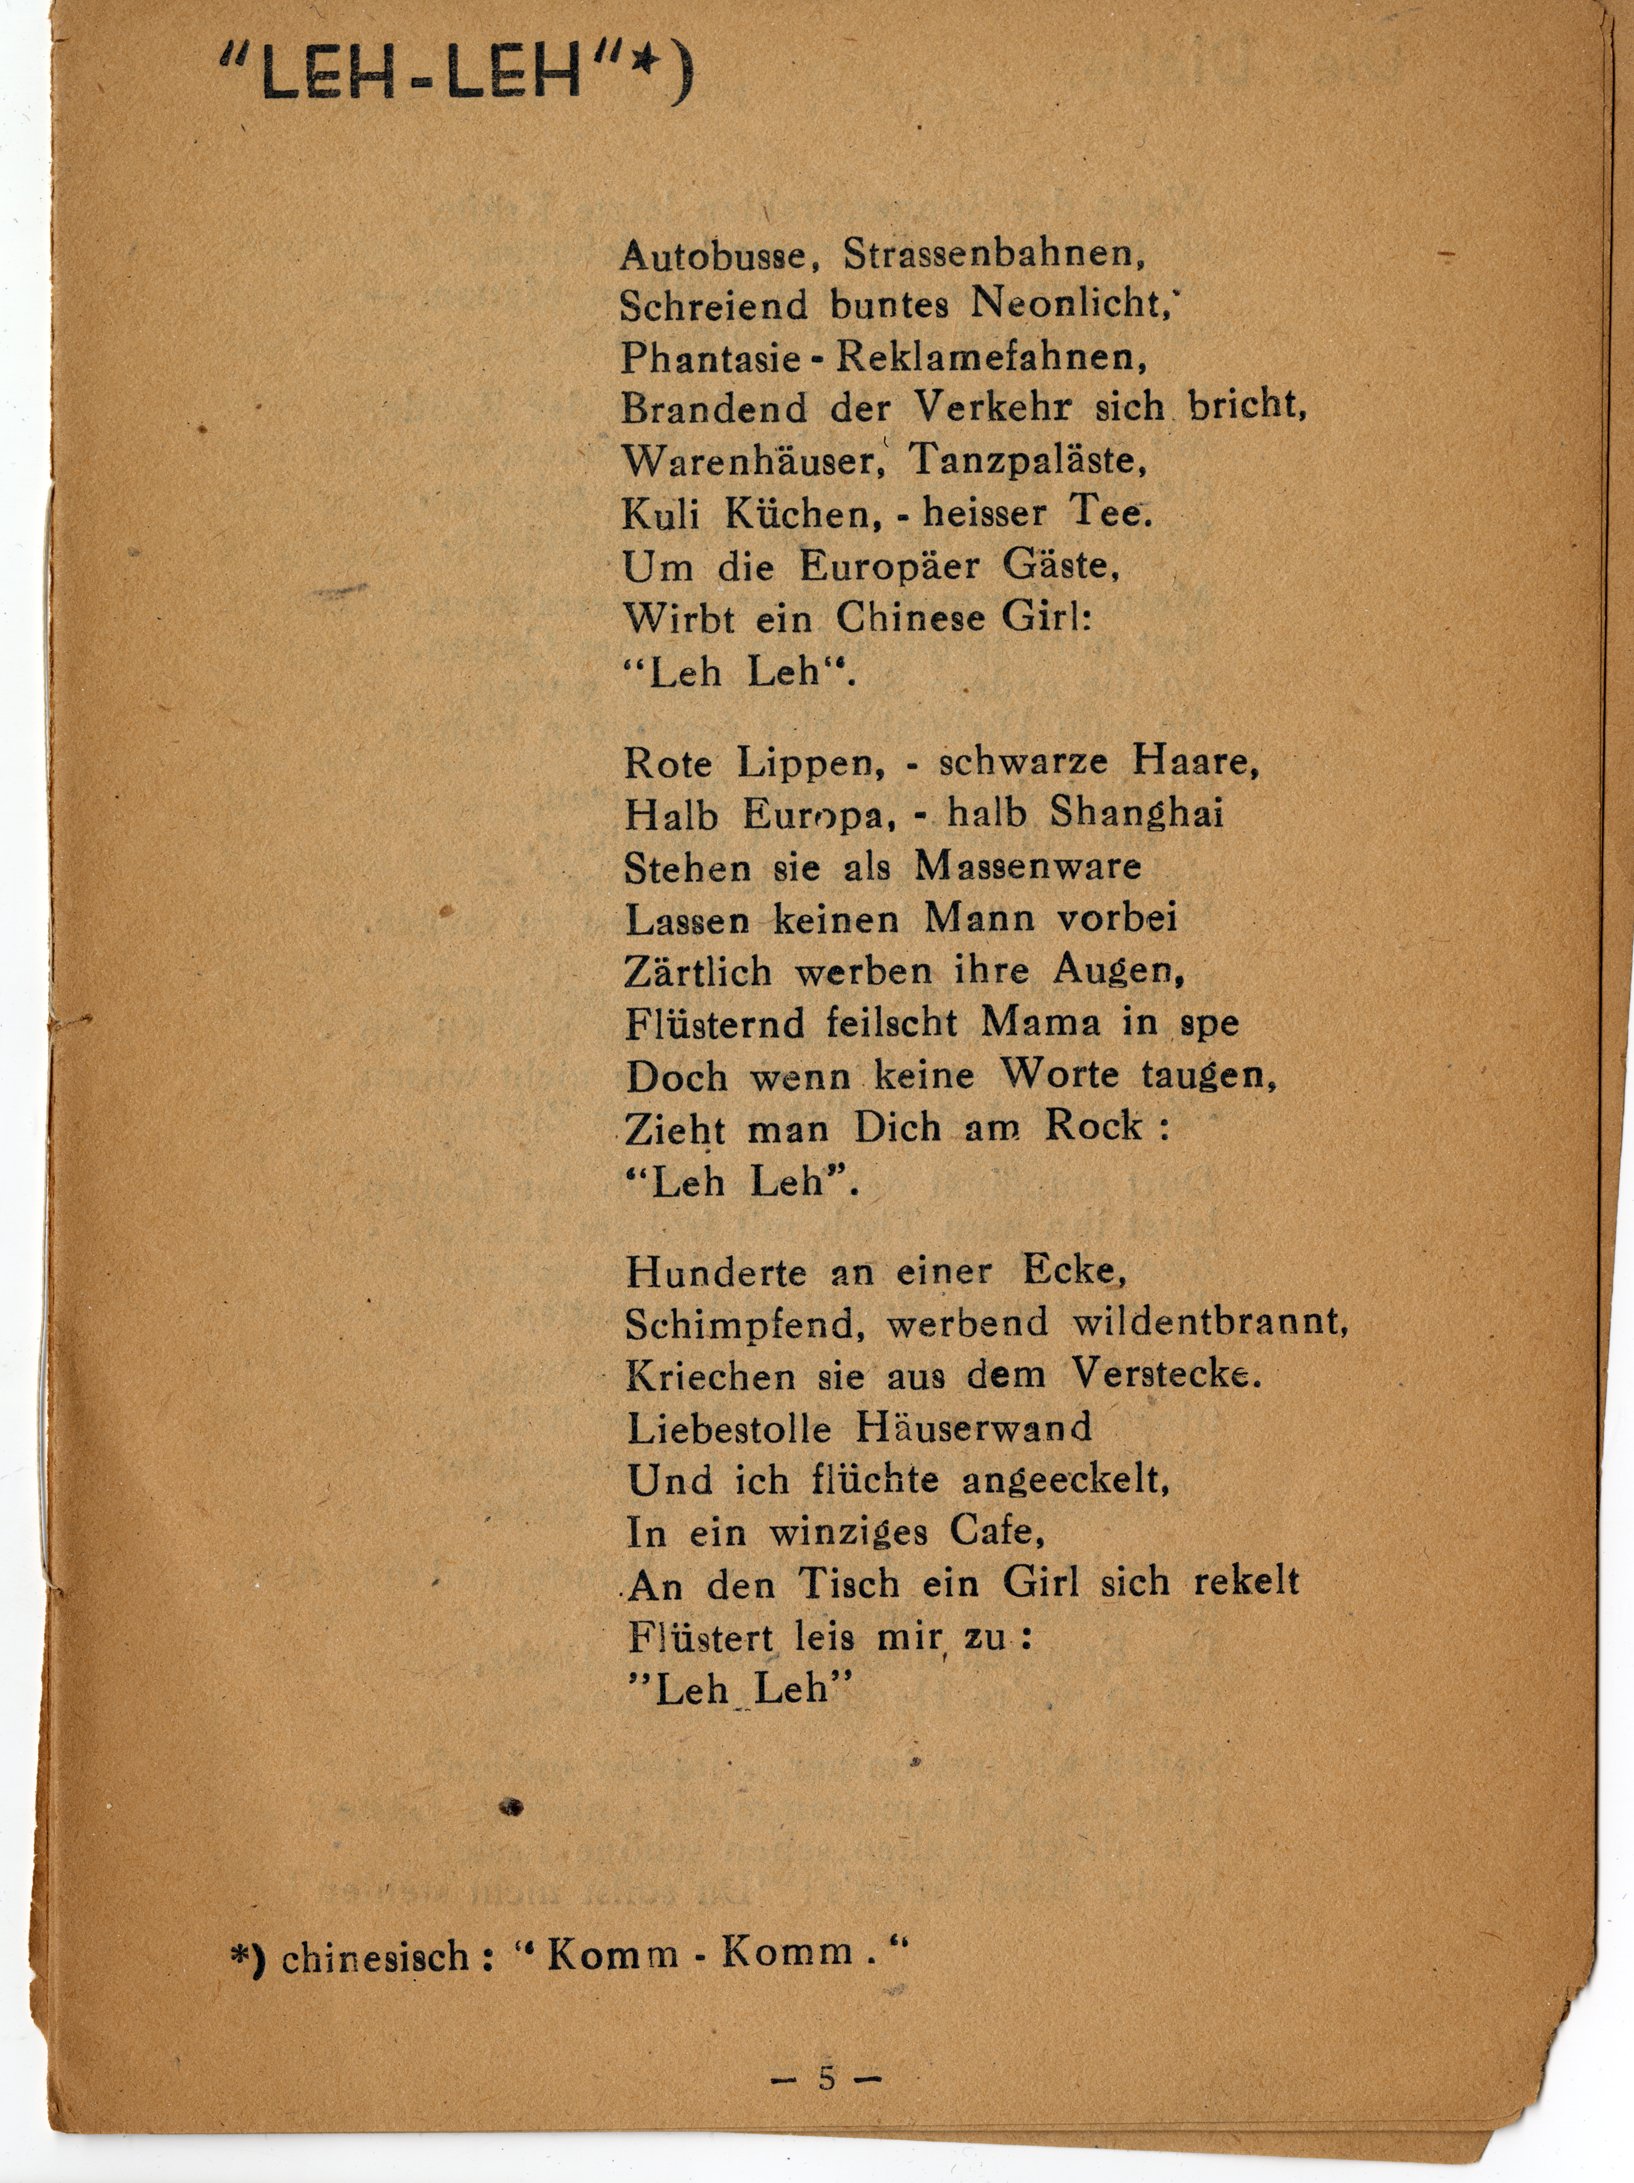 A German poem entitled "Leh-Leh."